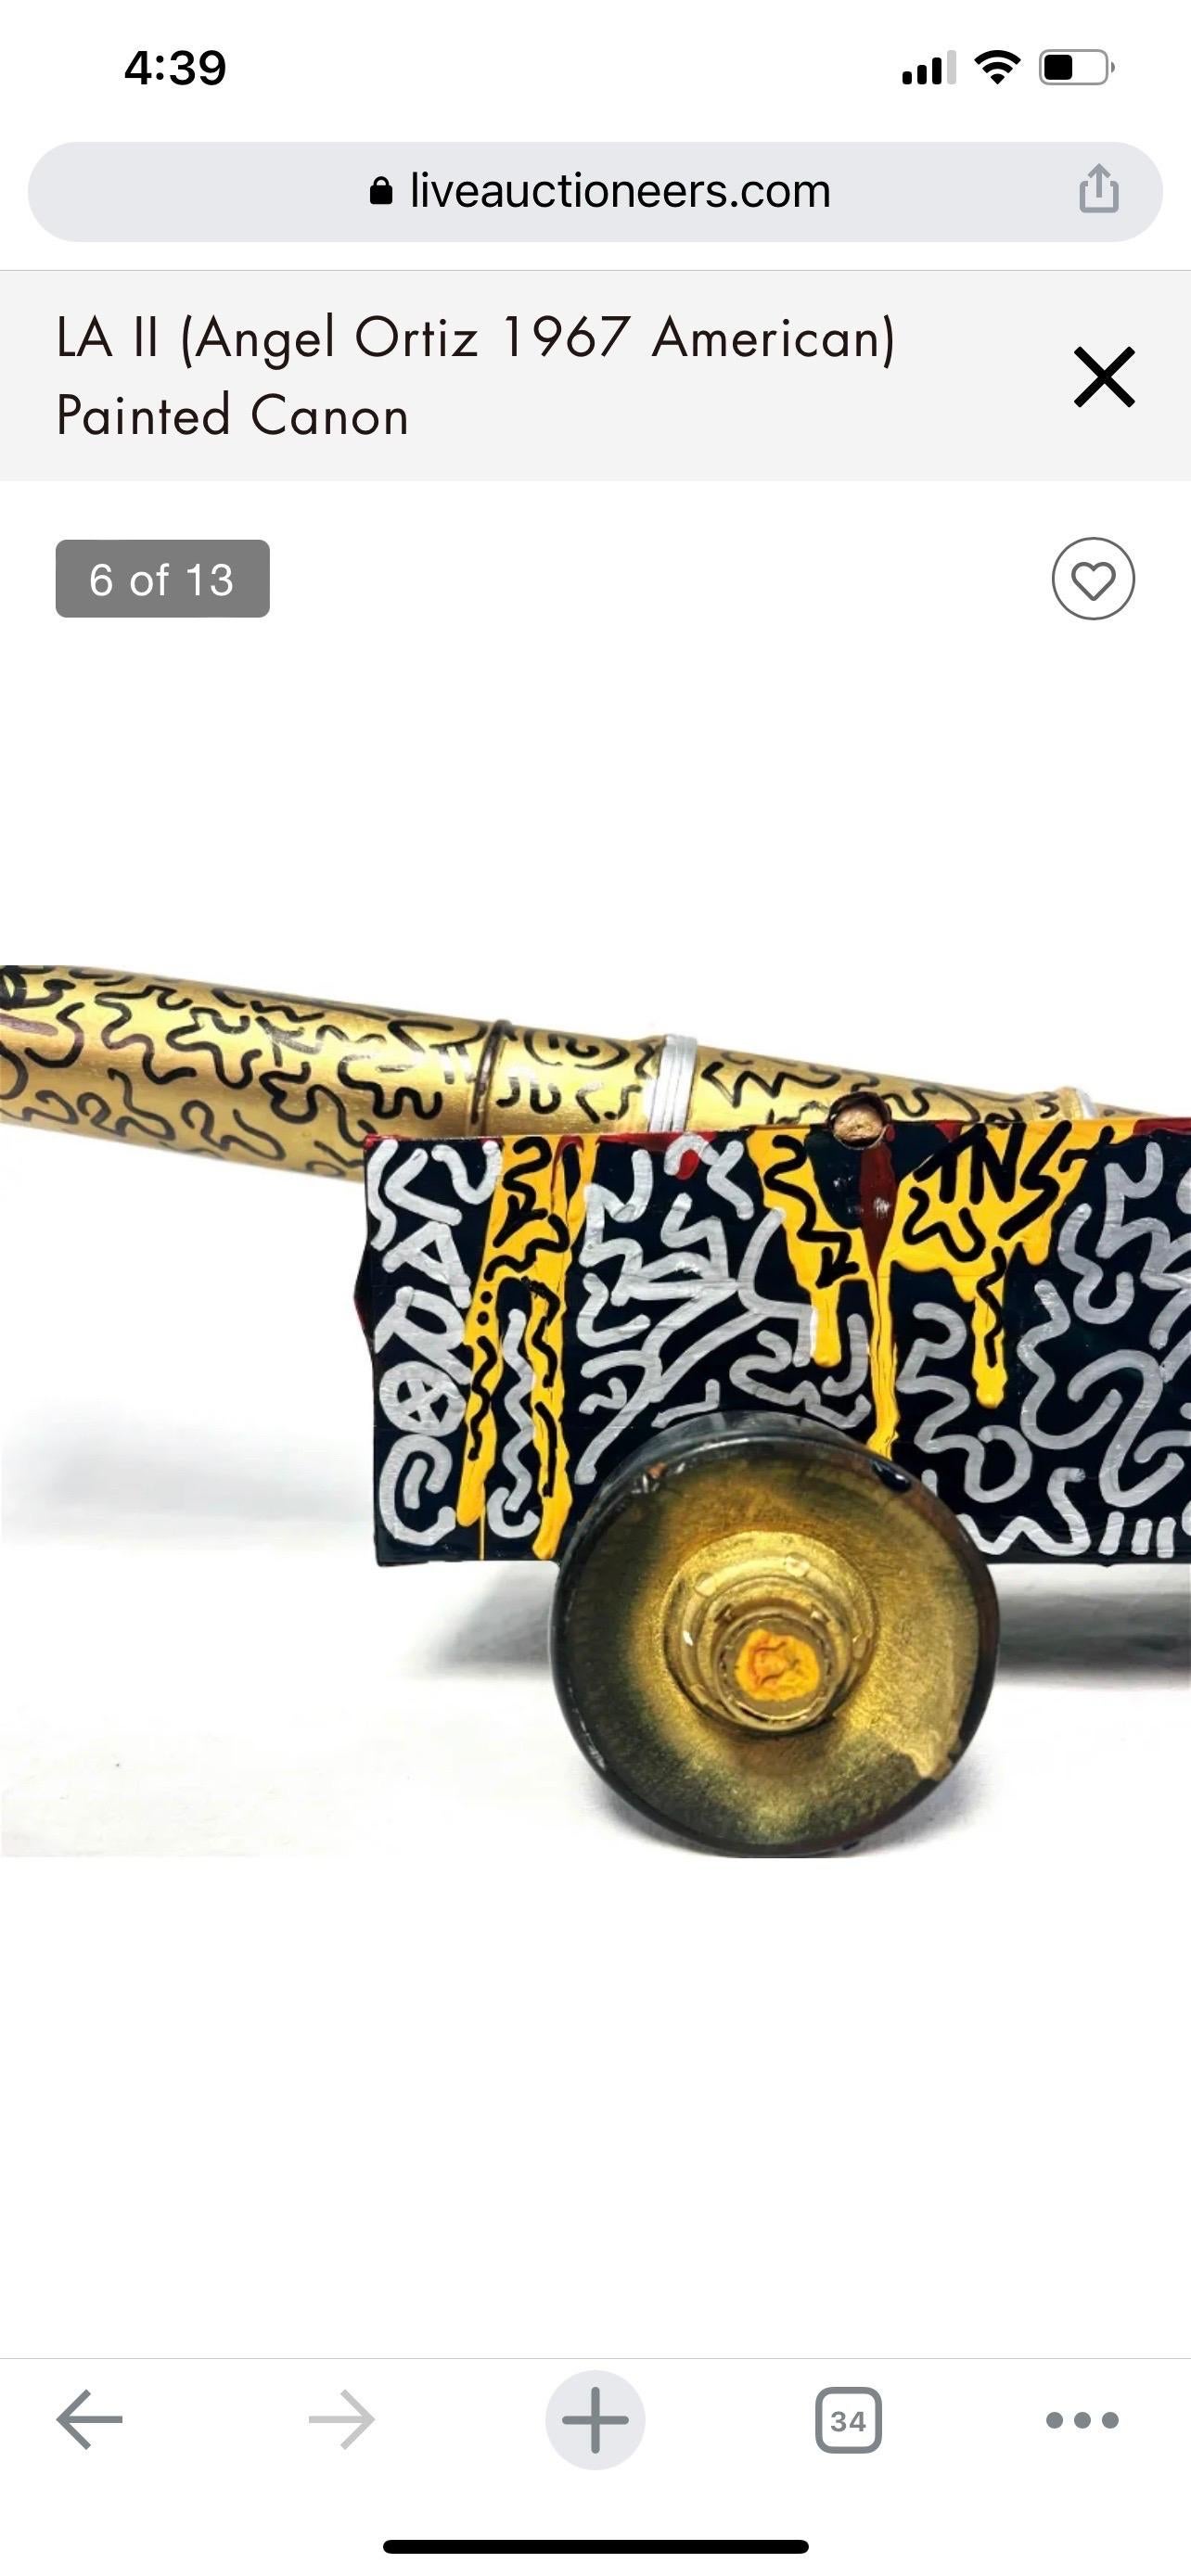 Graffiti Painting Cannon Gun LA2 Keith Haring Collaborator, Street Art Sculpture 2